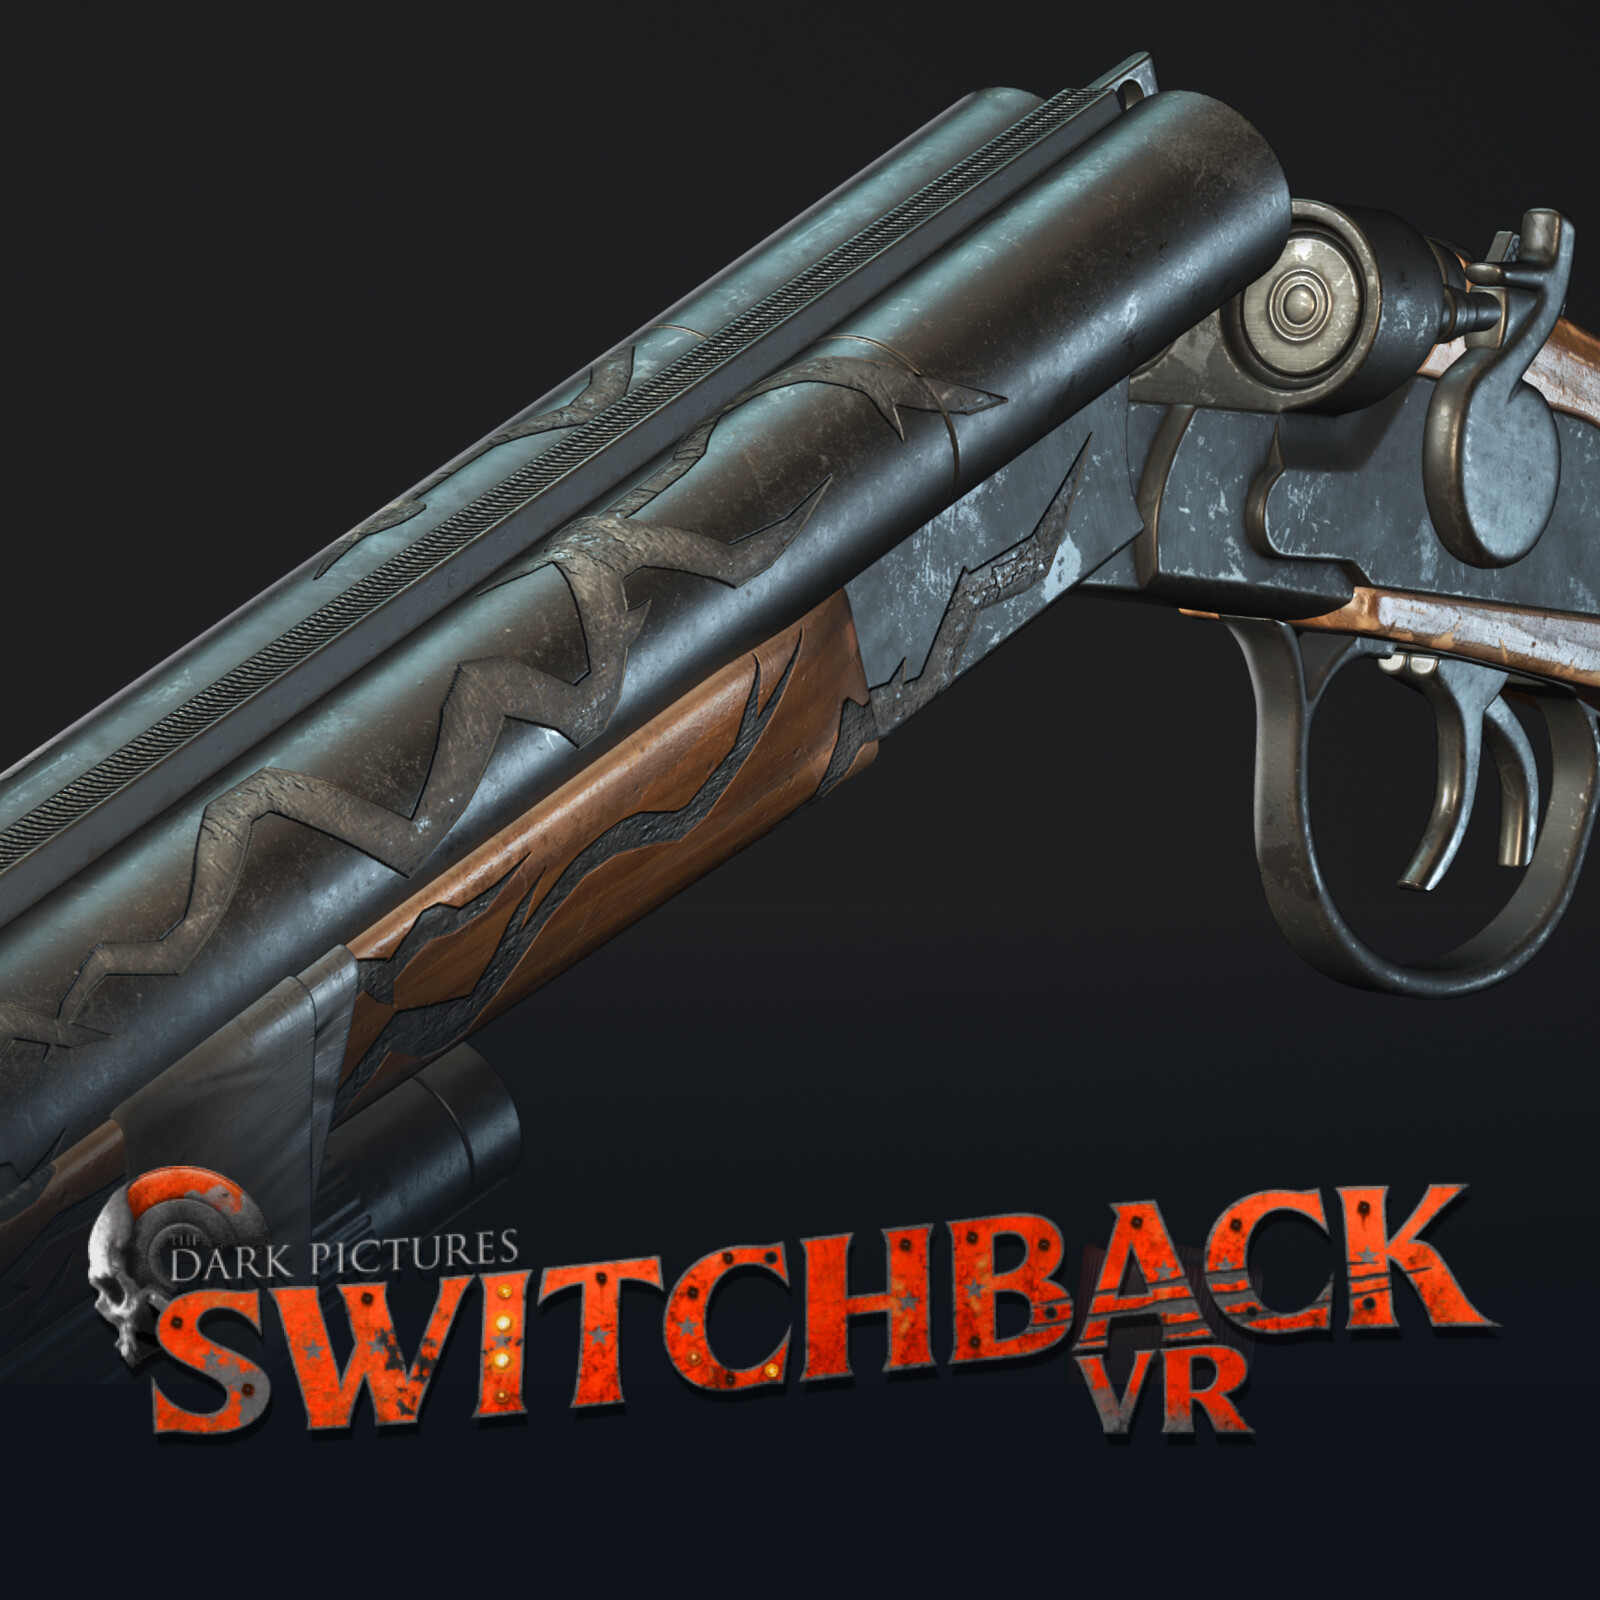 Switchback VR - Shotgun